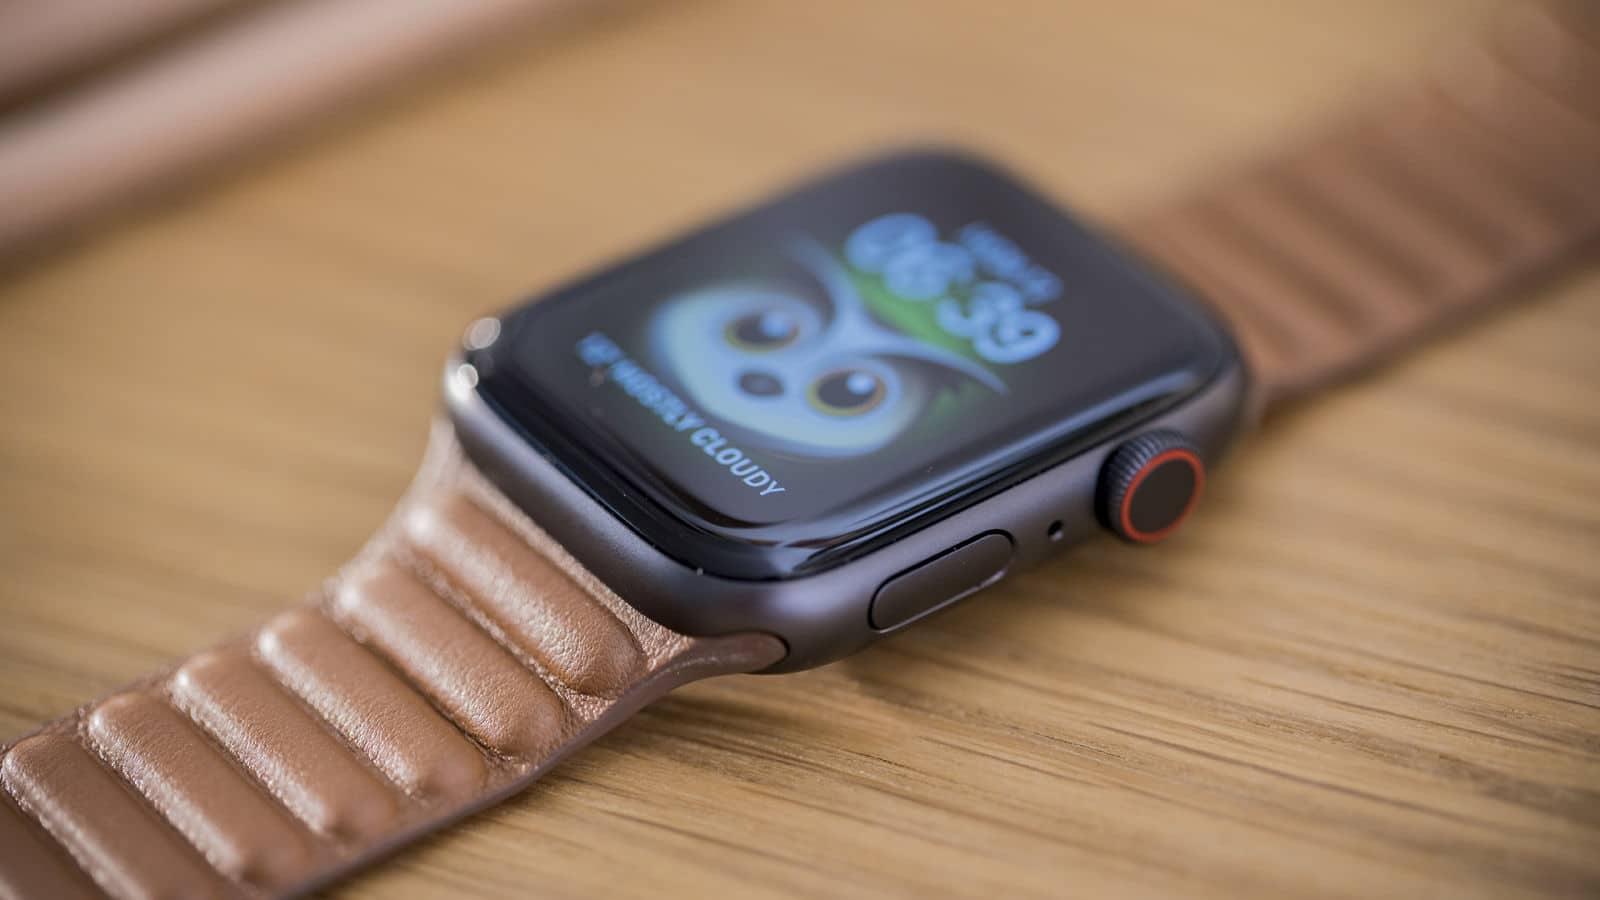 Apple Watch SE 40mm (GPS) - Viền nhôm dây cao su (Gold)